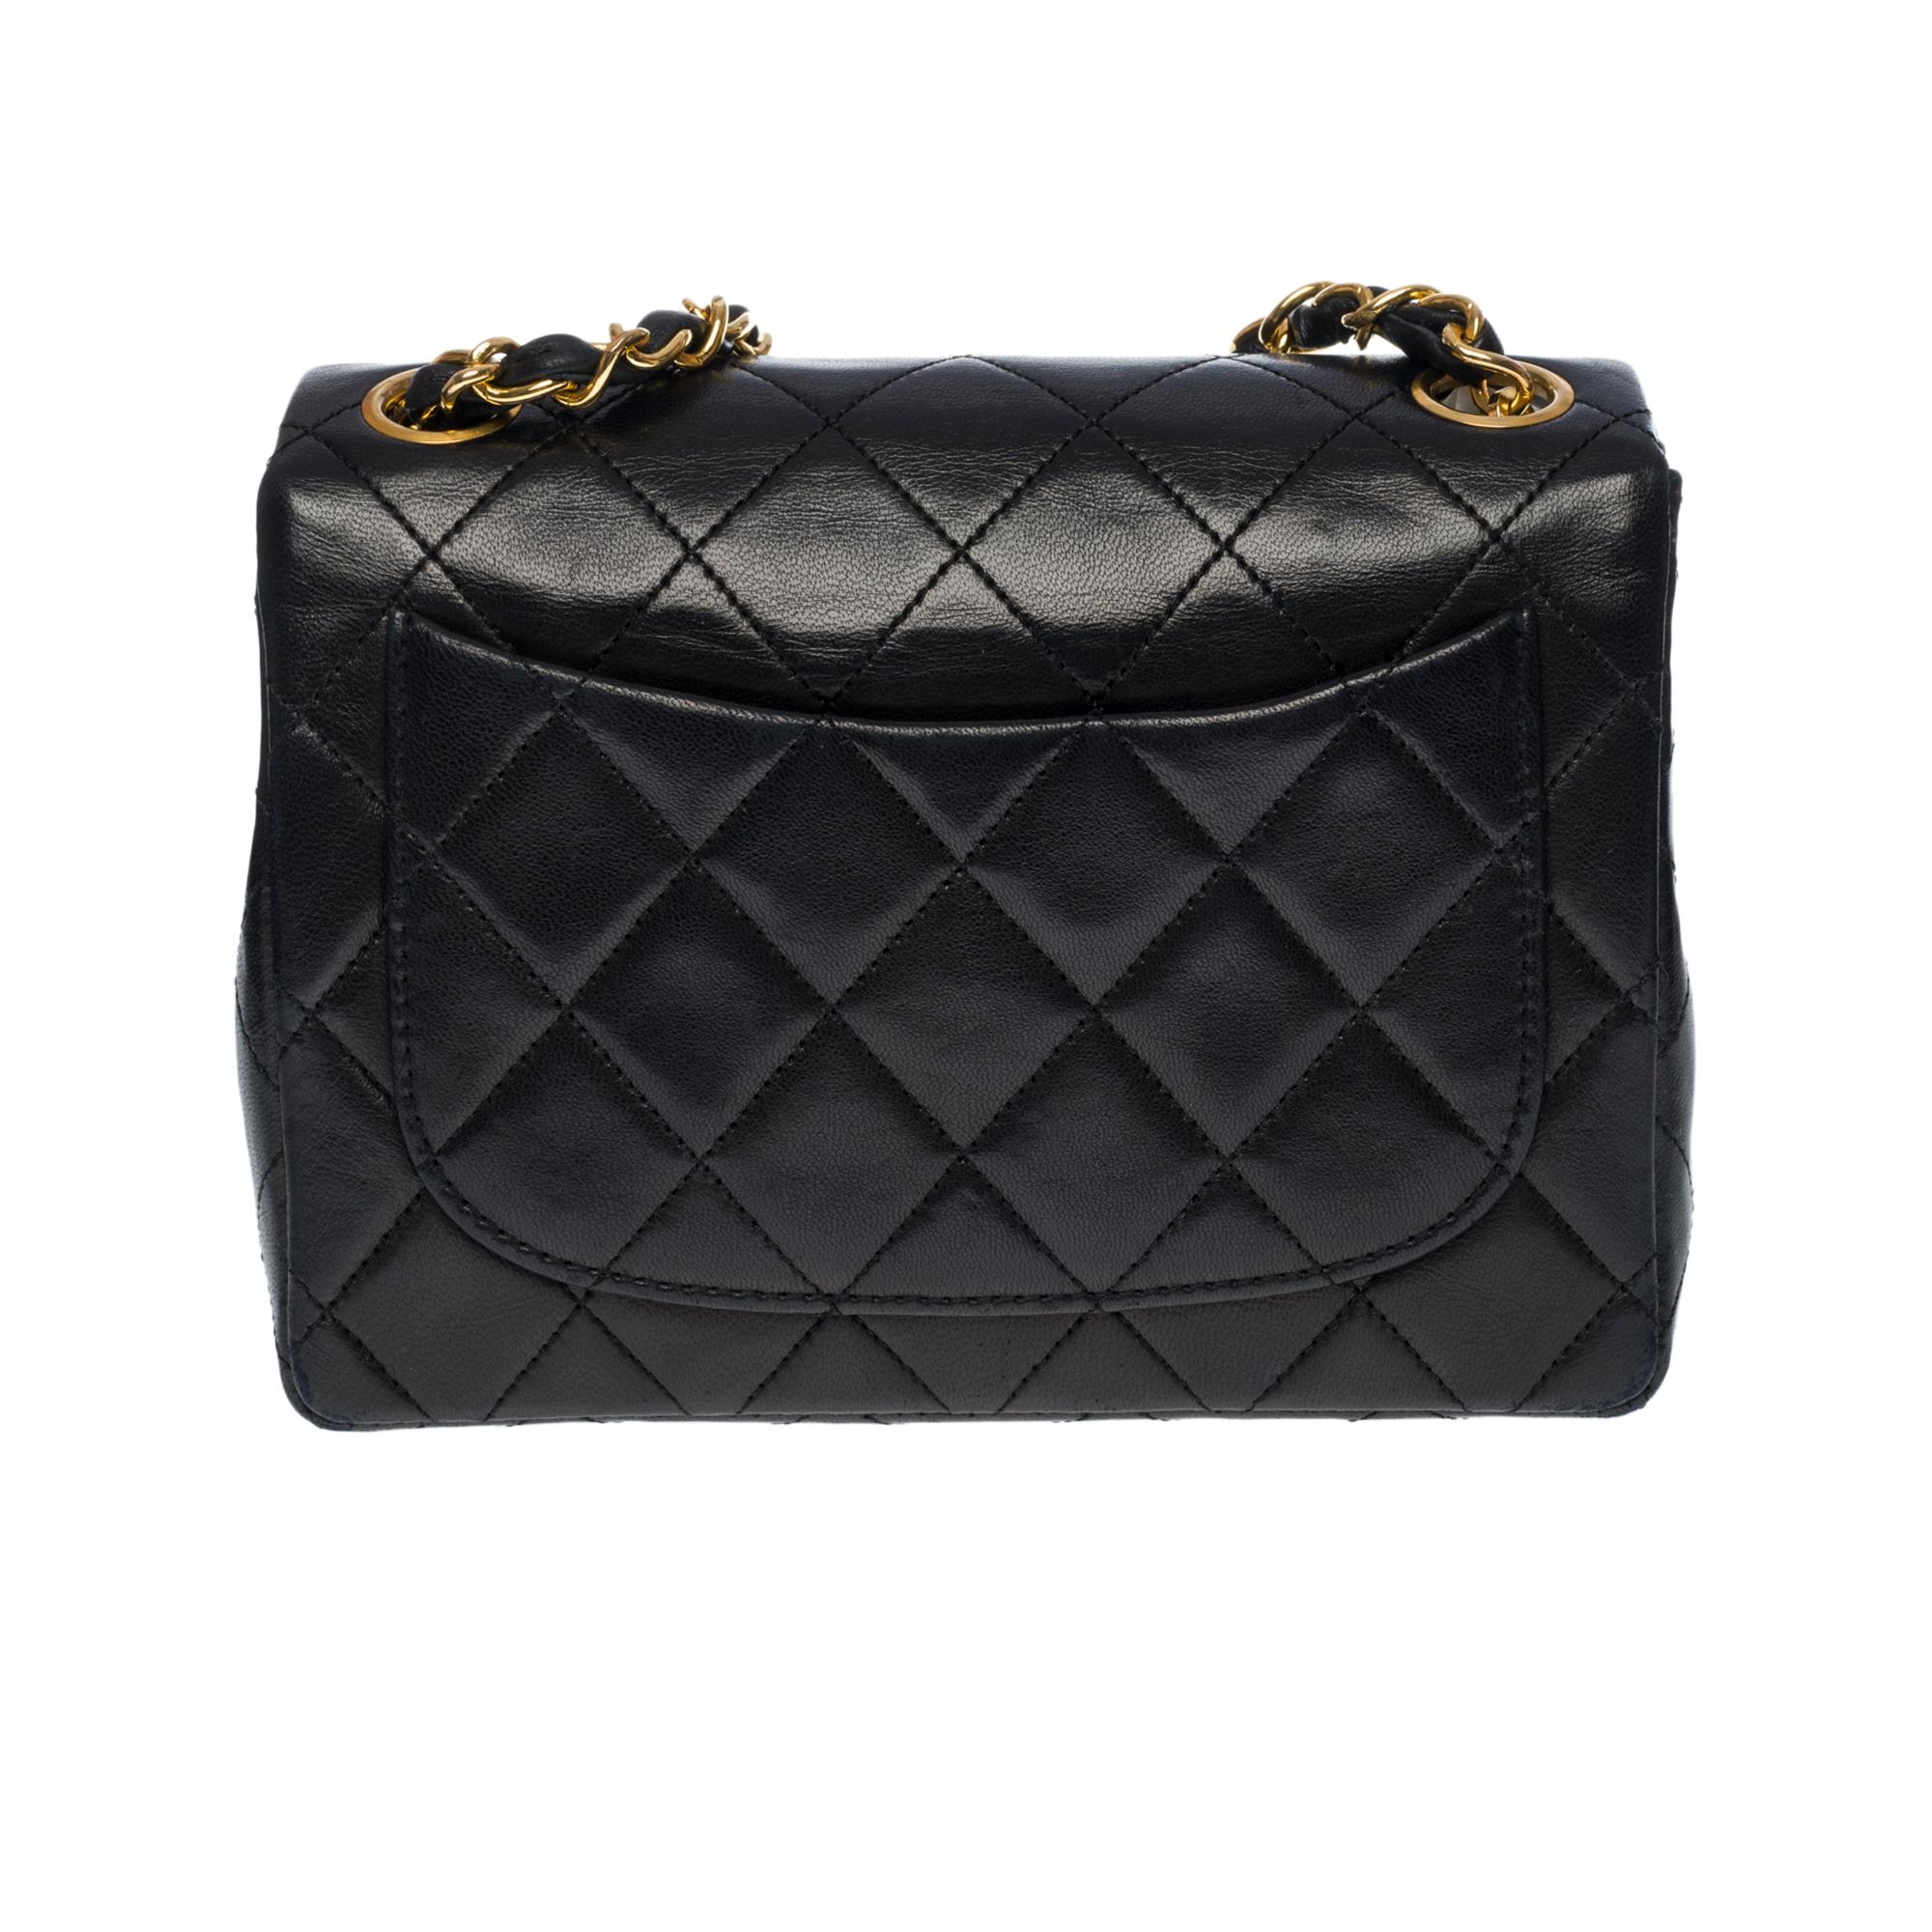 Black Chanel Mini Timeless flap shoulder bag in black quilted lambskin,  GHW